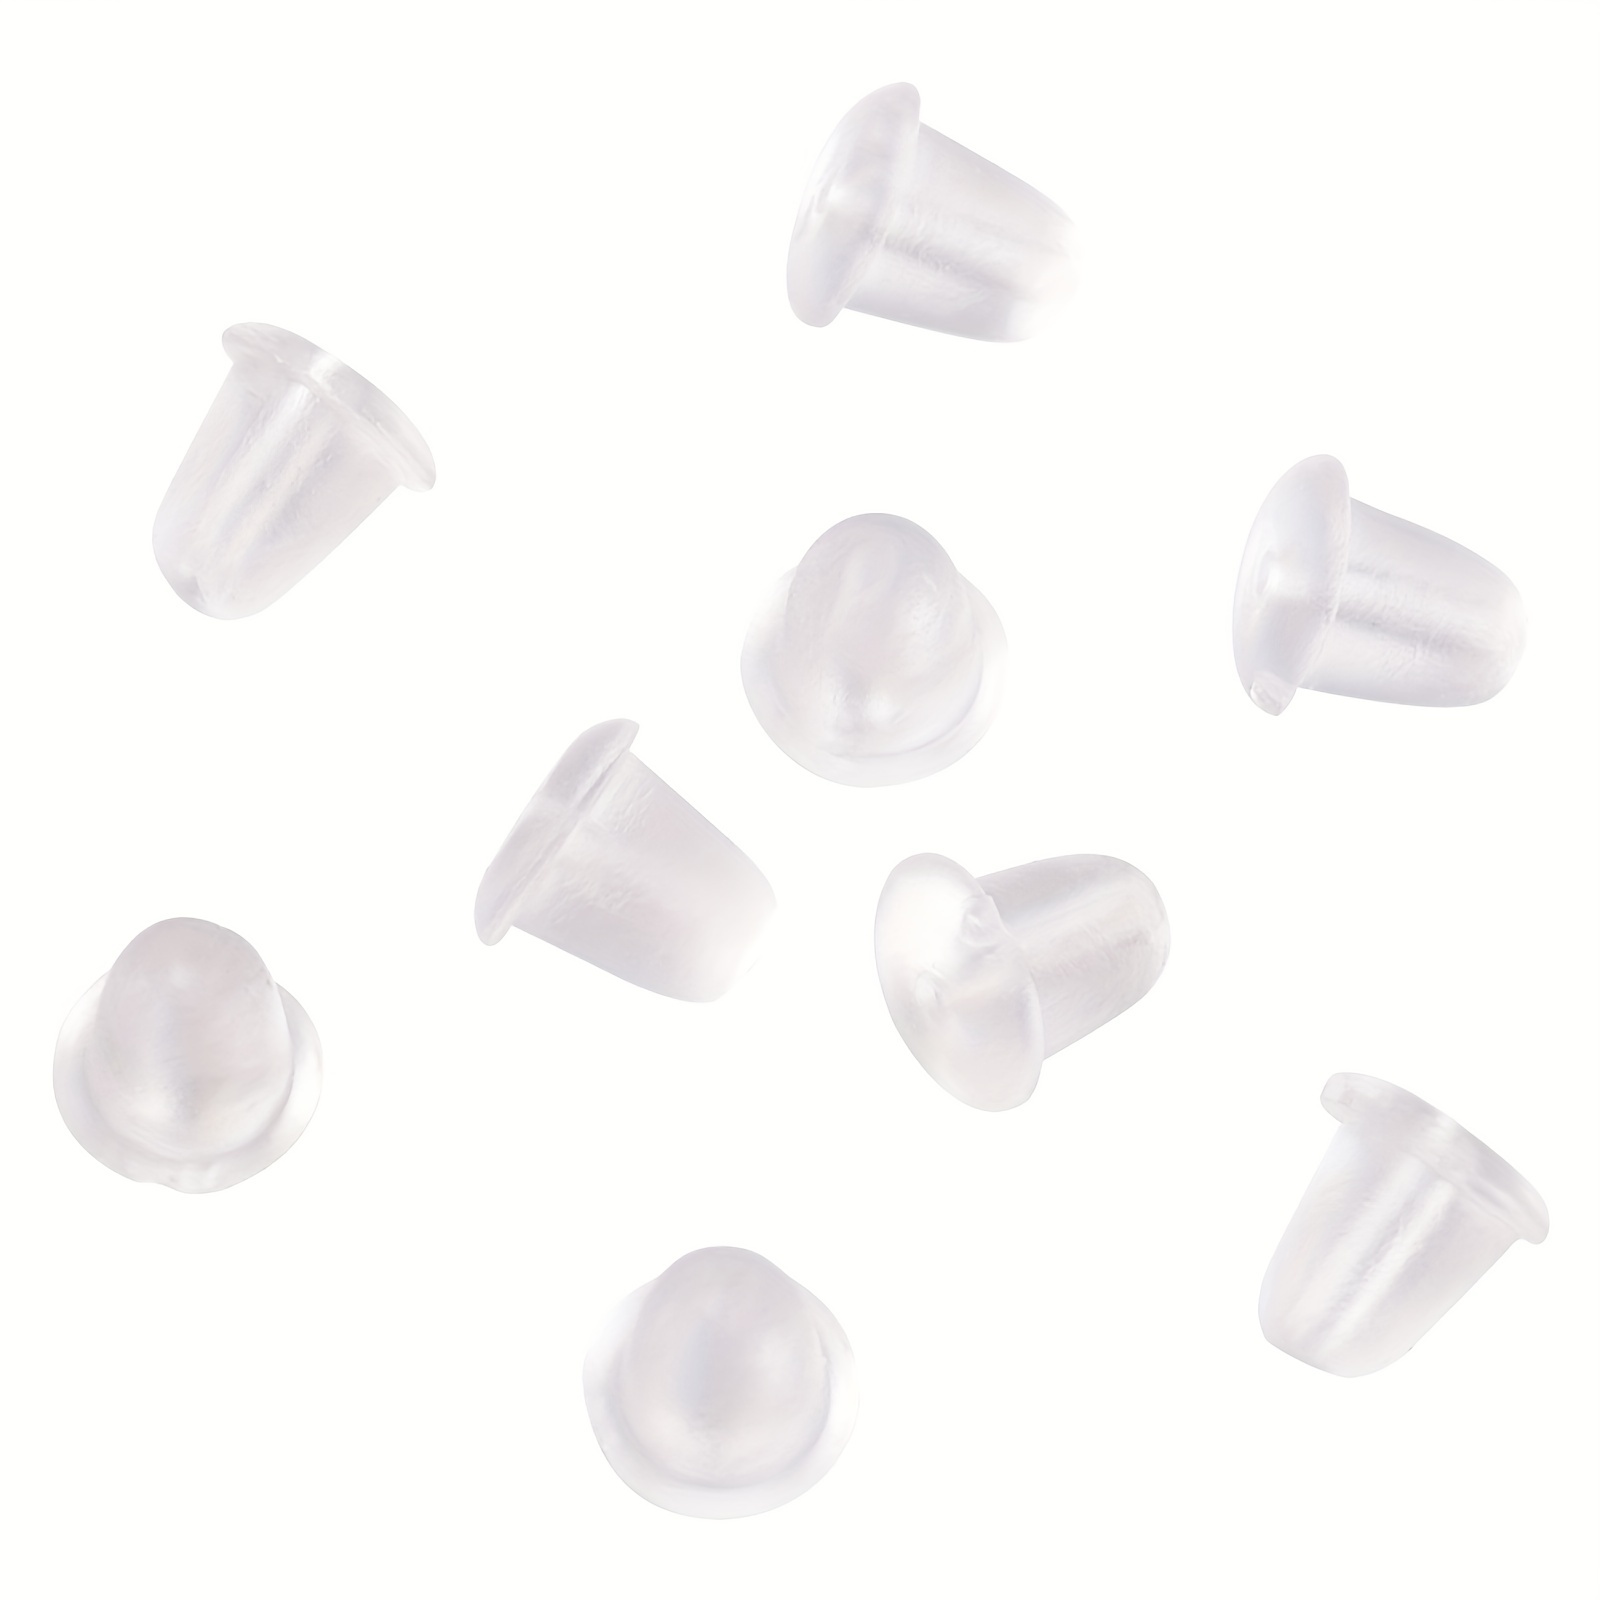 Plastic Ear Nuts, Soft Clear Earring Backs Safety Bullet Clutch